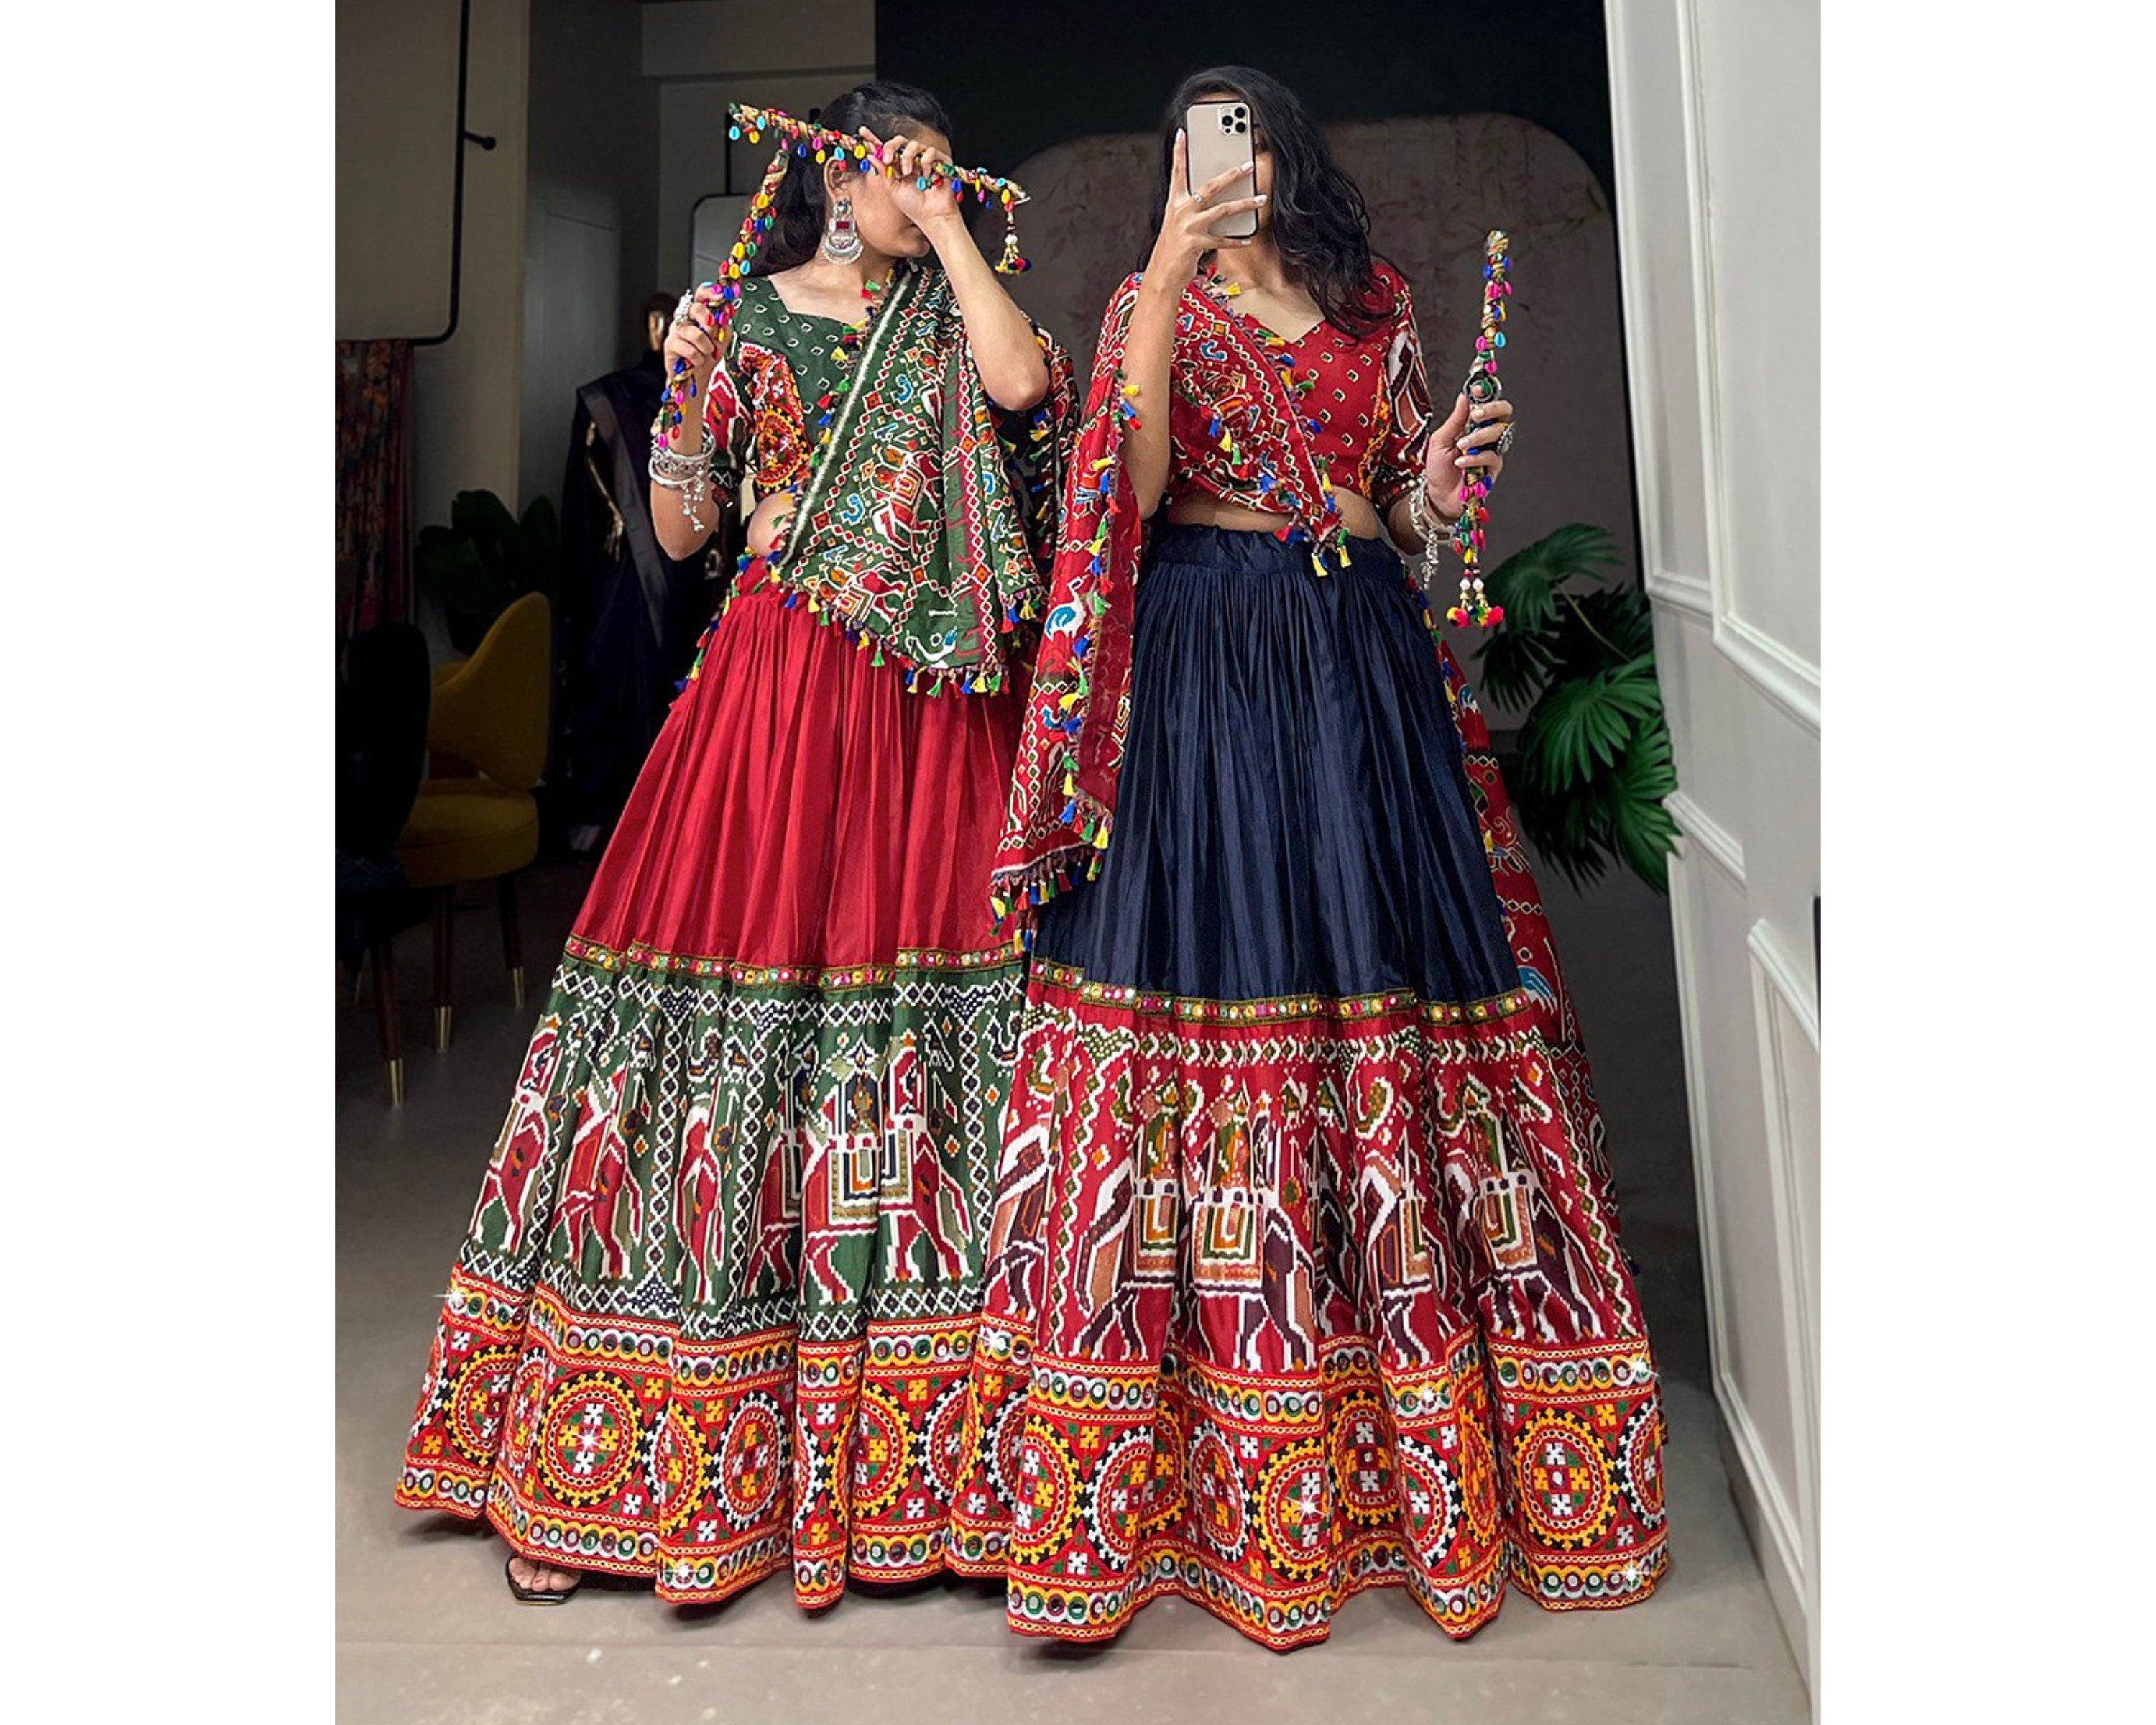 Female Garba Dancers In Ahmedabad Gujarat October 2019 Stock Photo -  Download Image Now - iStock